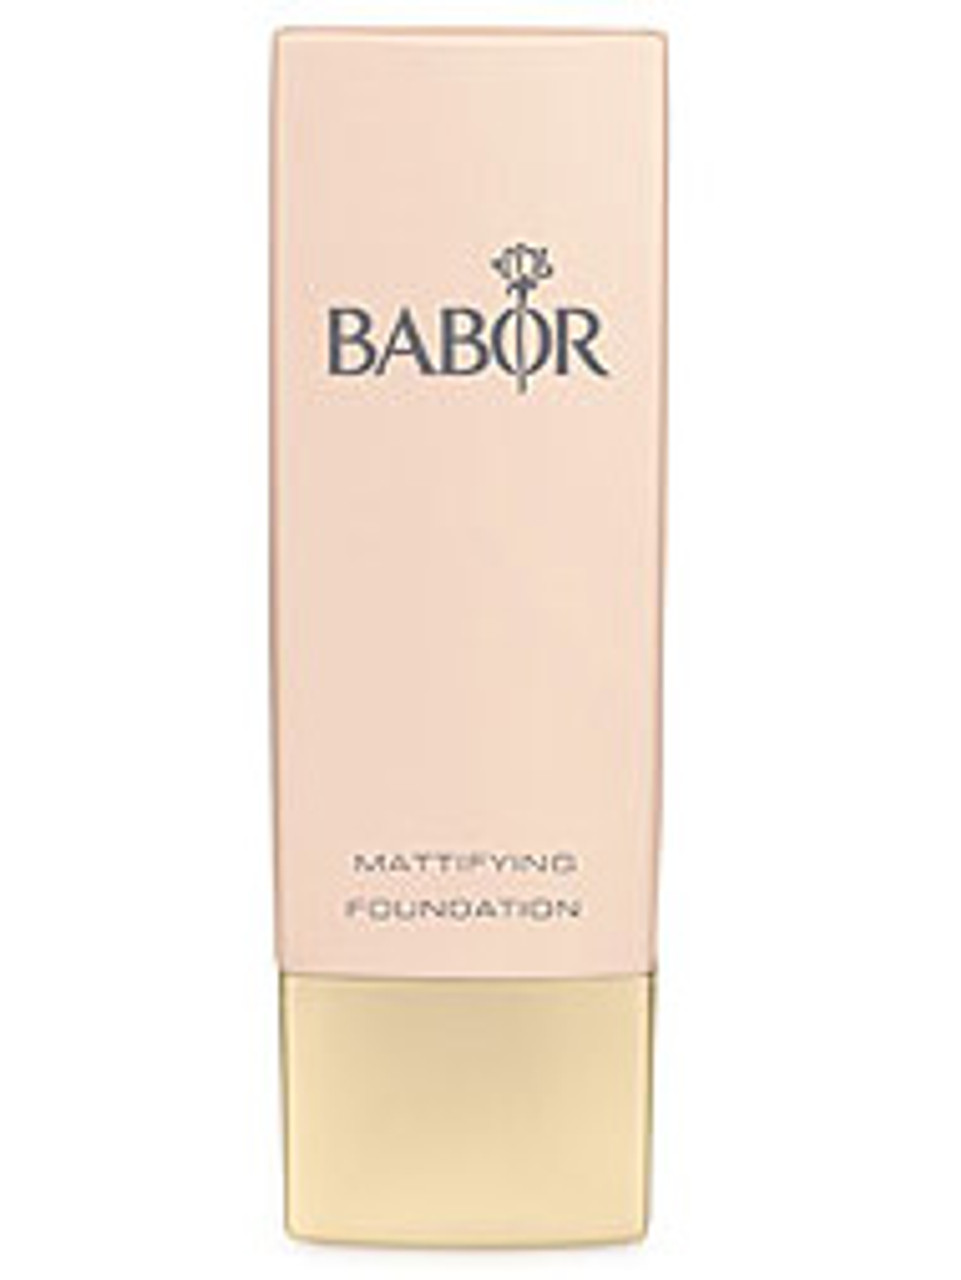 BABOR - Mattifying Foundation - Beauty Bridge